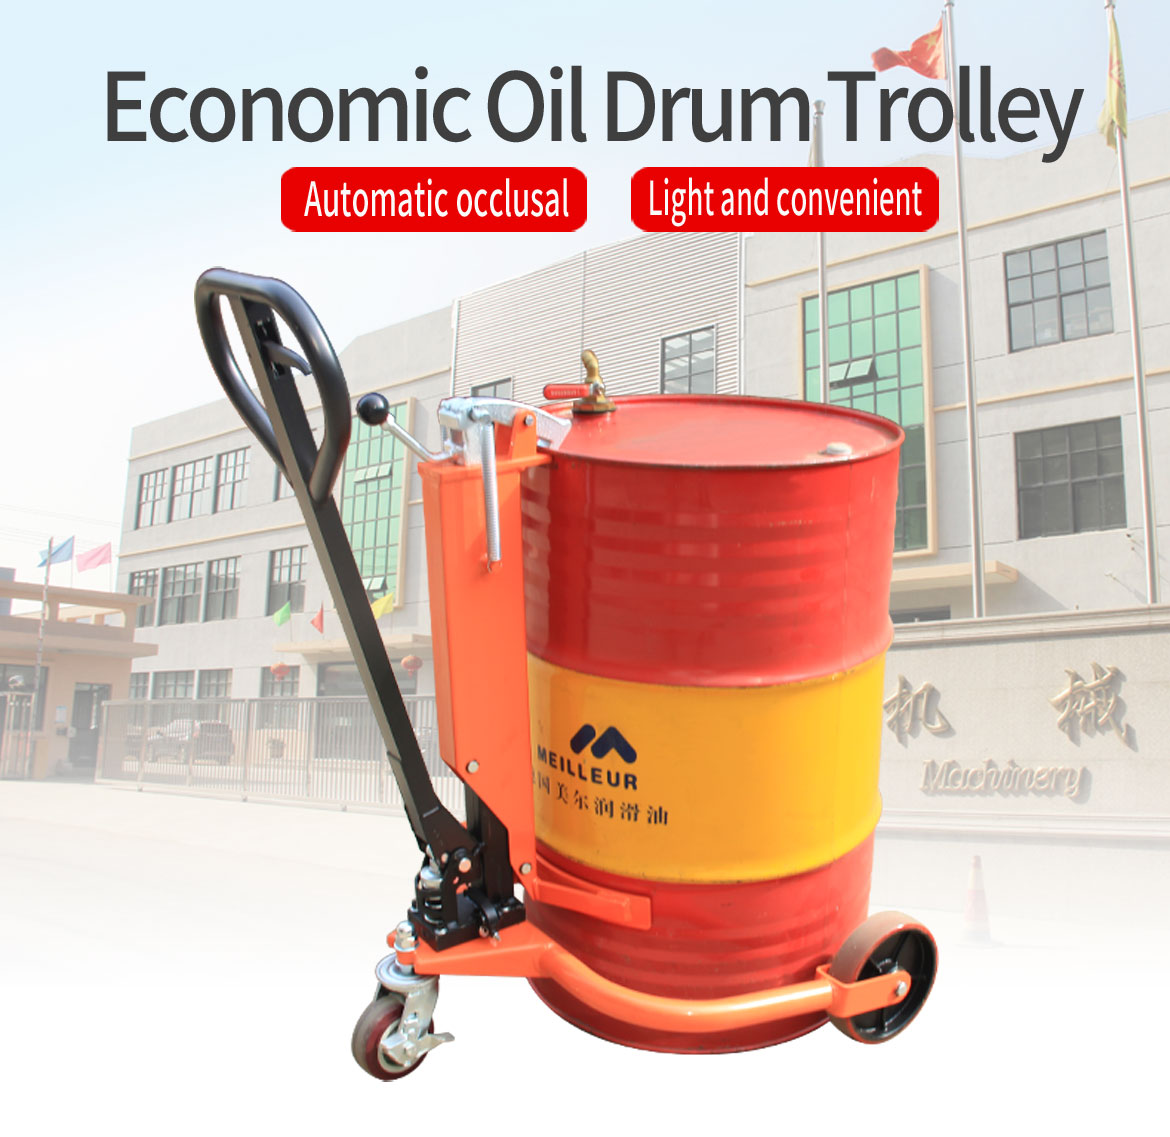 Economic Oil Drum Trolley